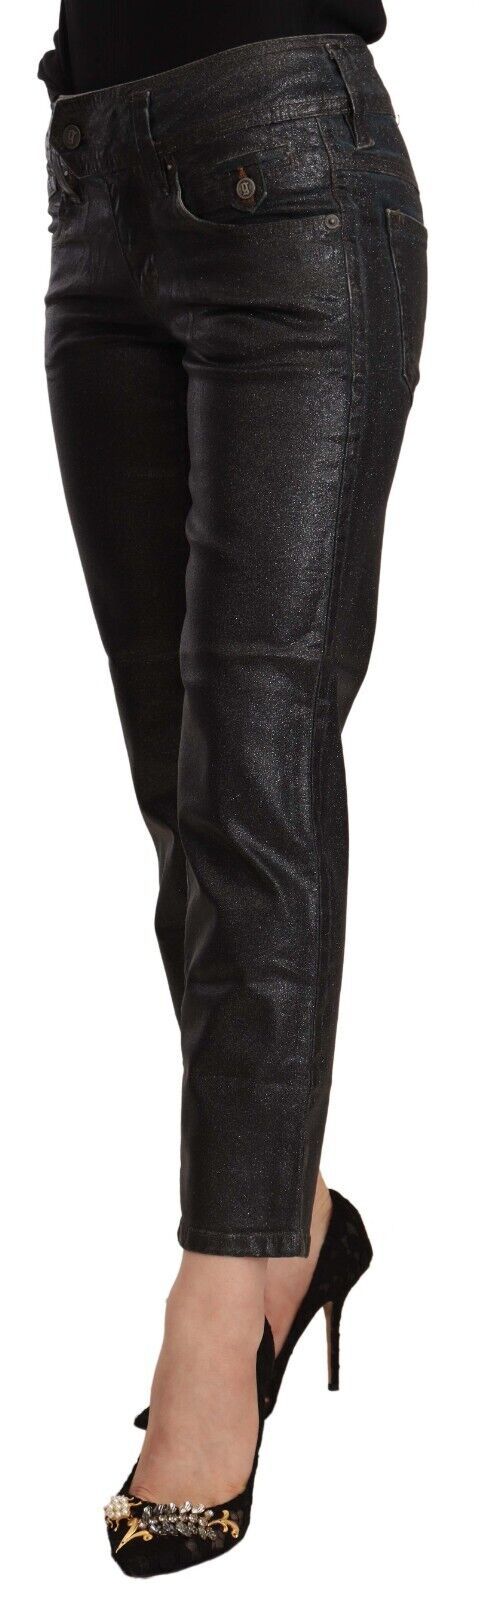 John Galliano Chic Black Glittered Cropped Pants